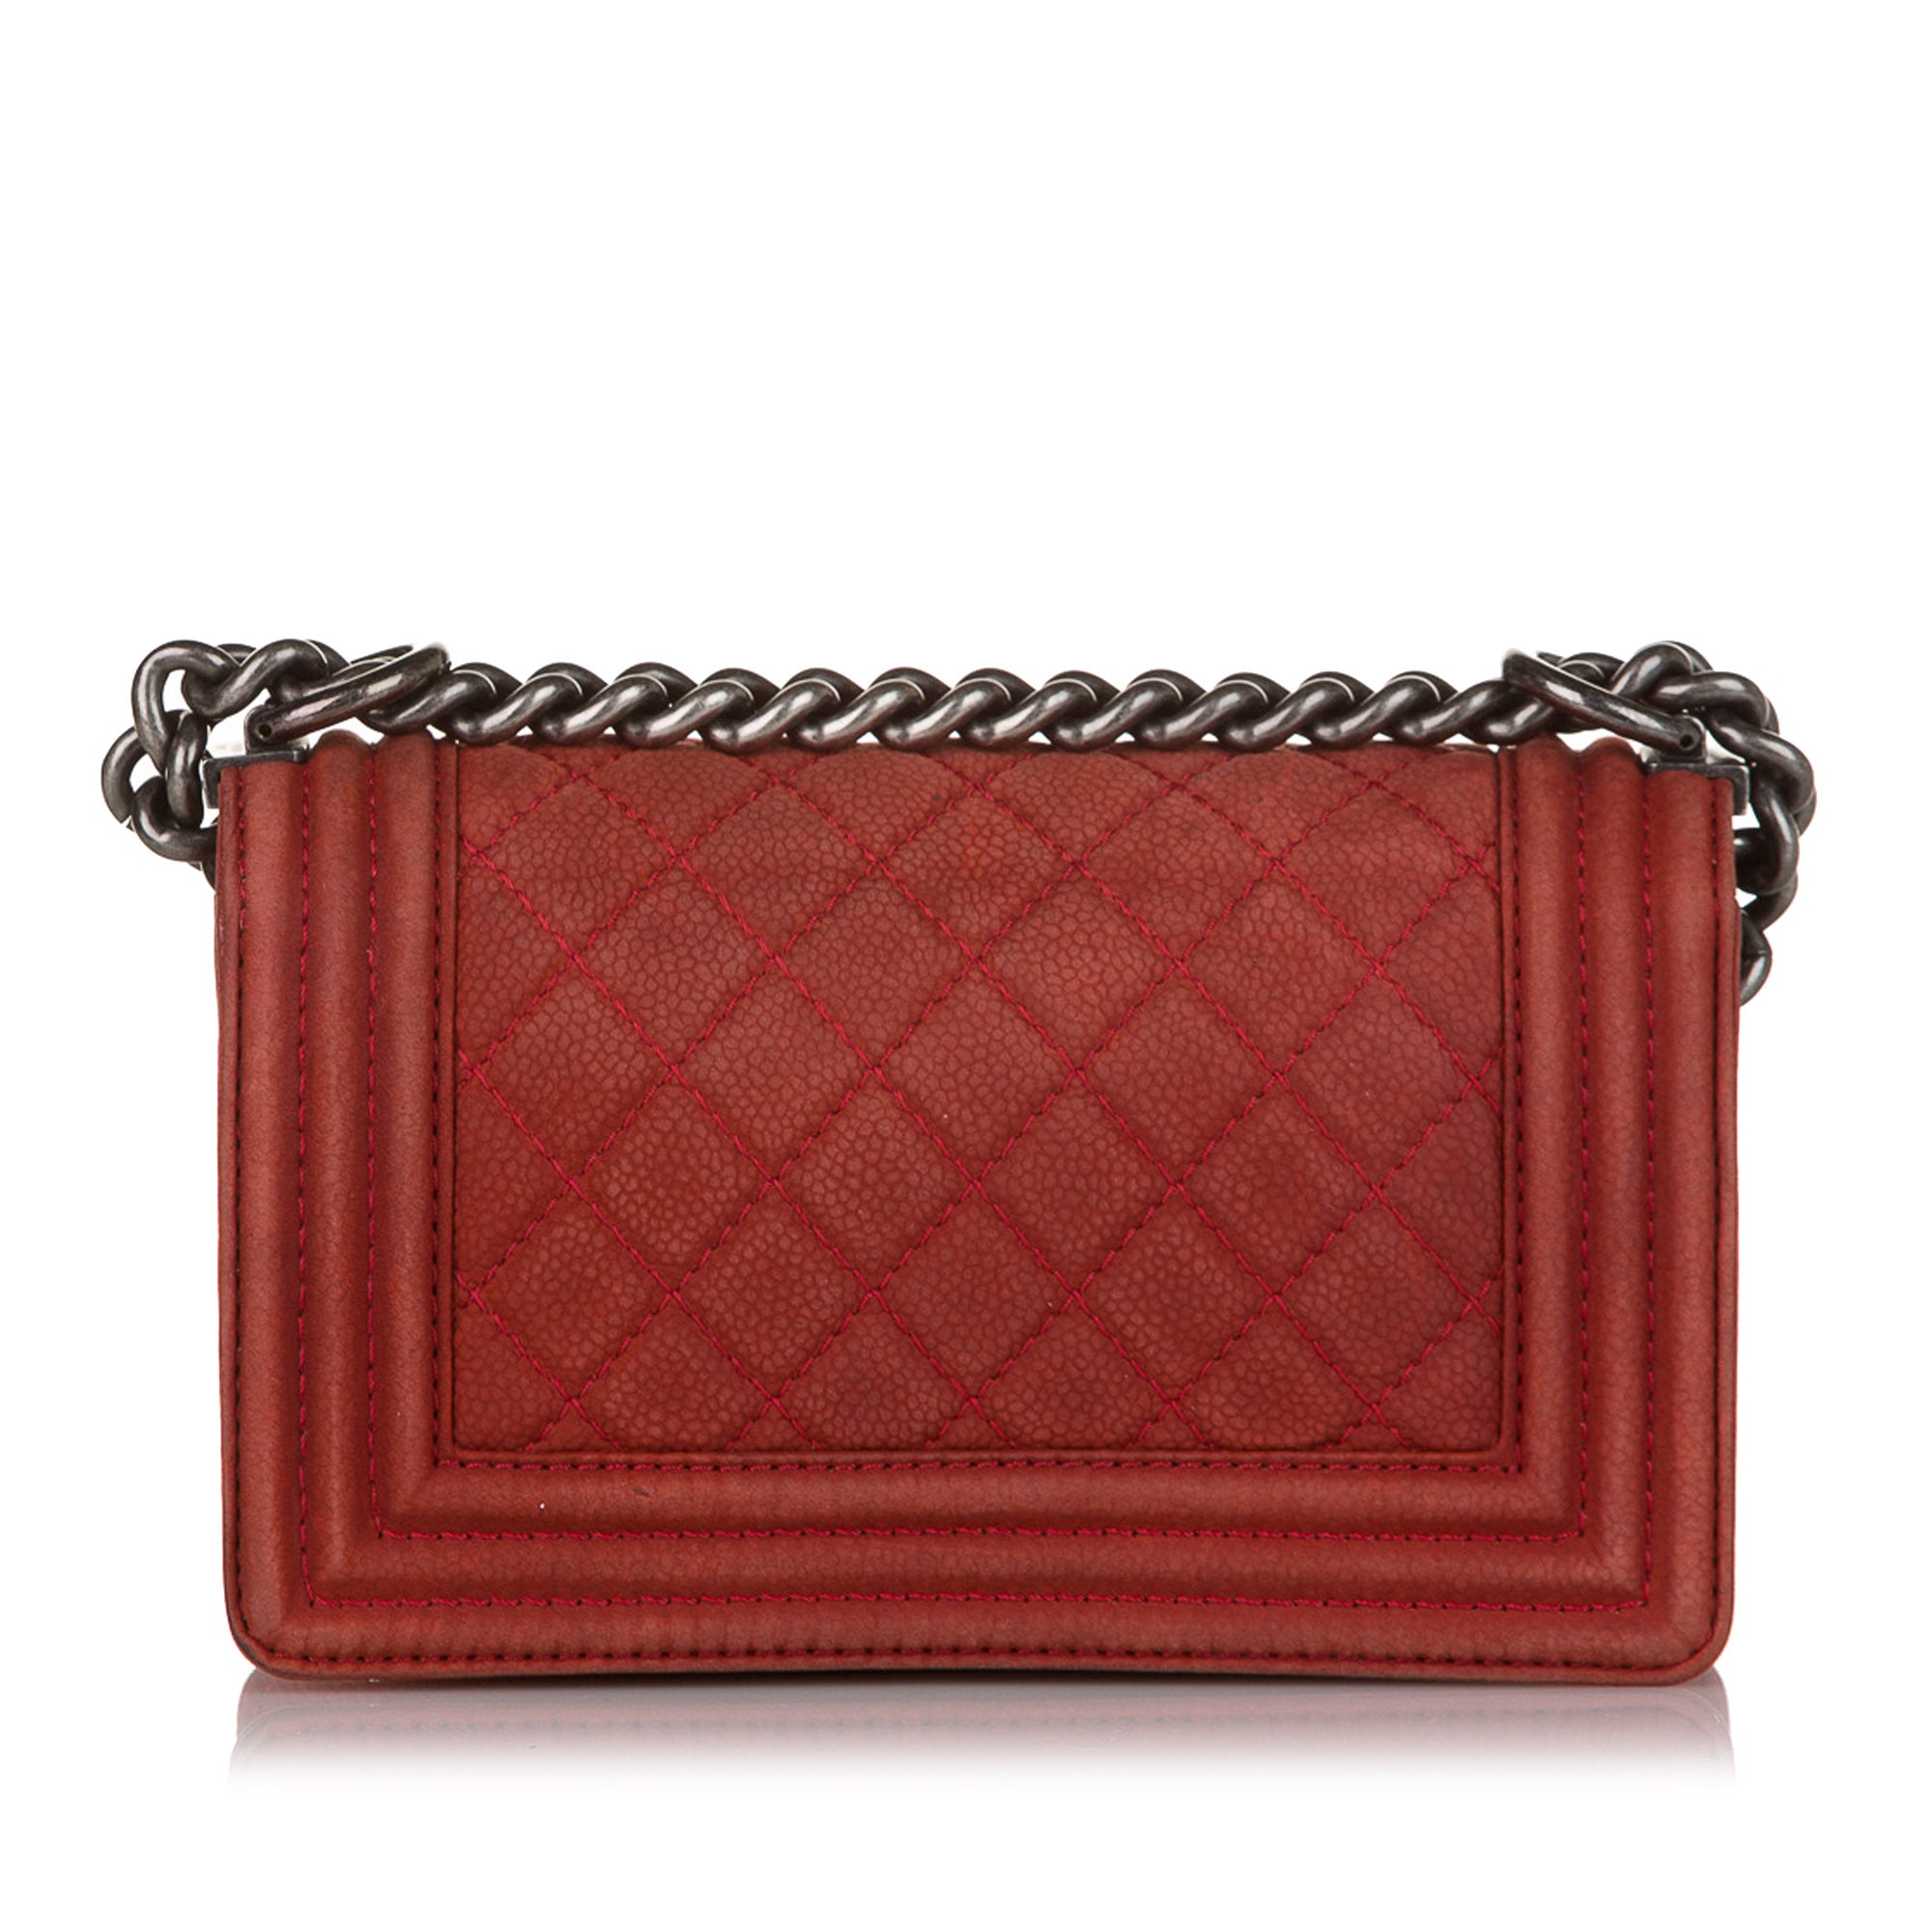 Red Chanel Boy Caviar Leather Flap Bag - Atelier-lumieresShops Revival